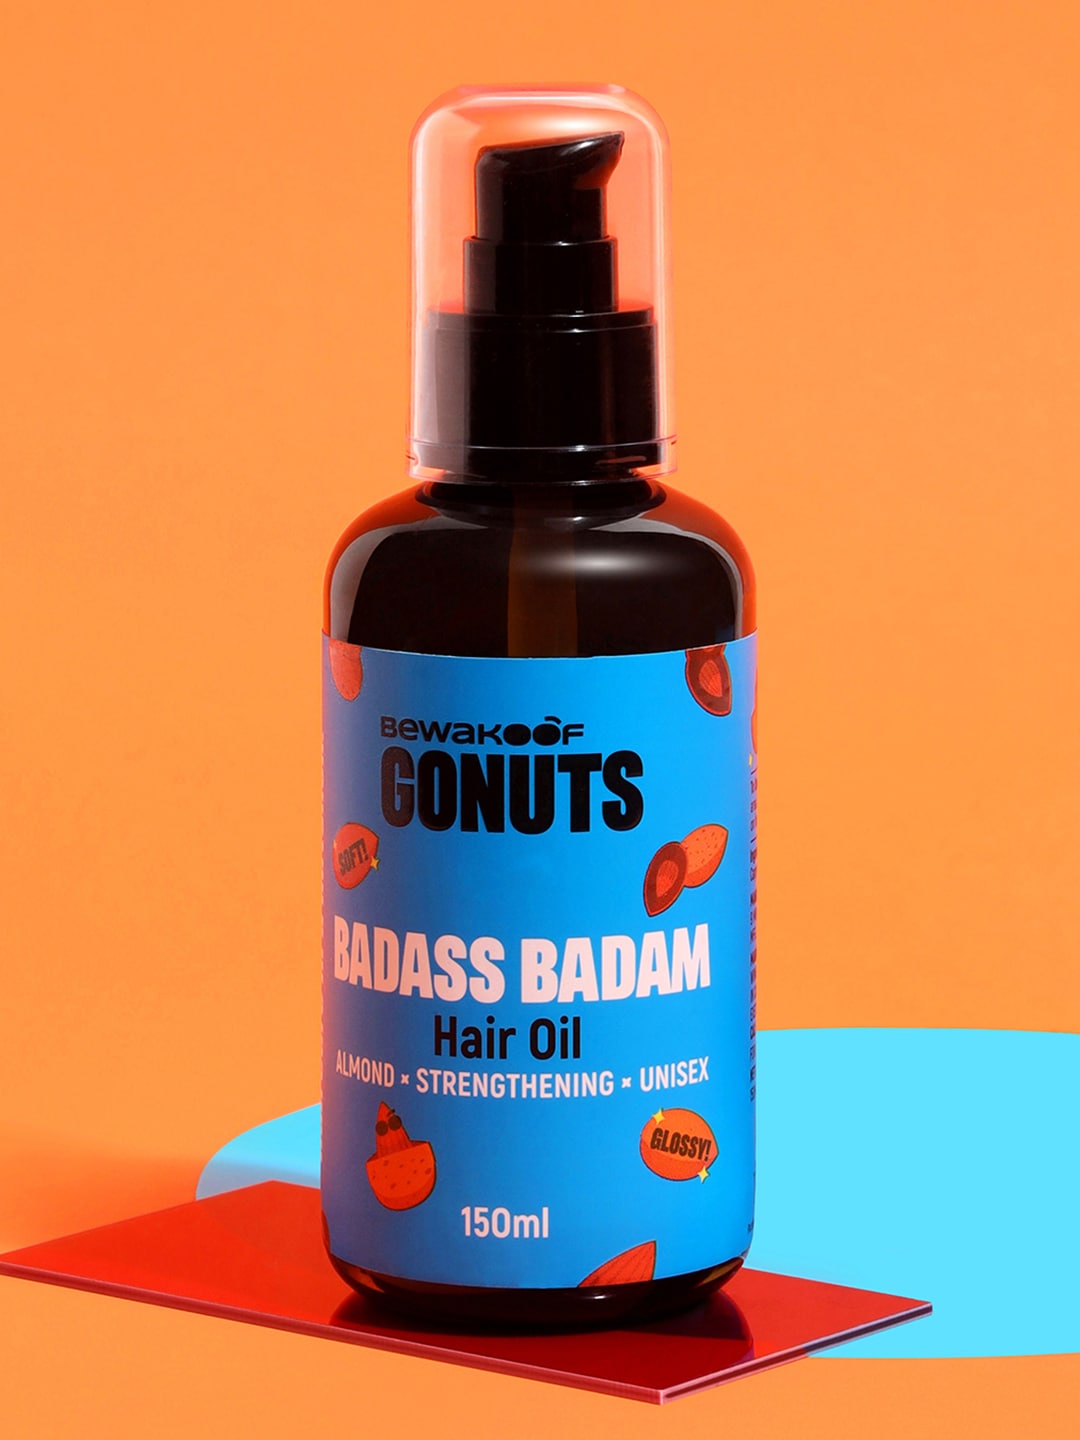 GONUTS BY BEWAKOOF Badass Badam Hair Oil 150 ml Price in India